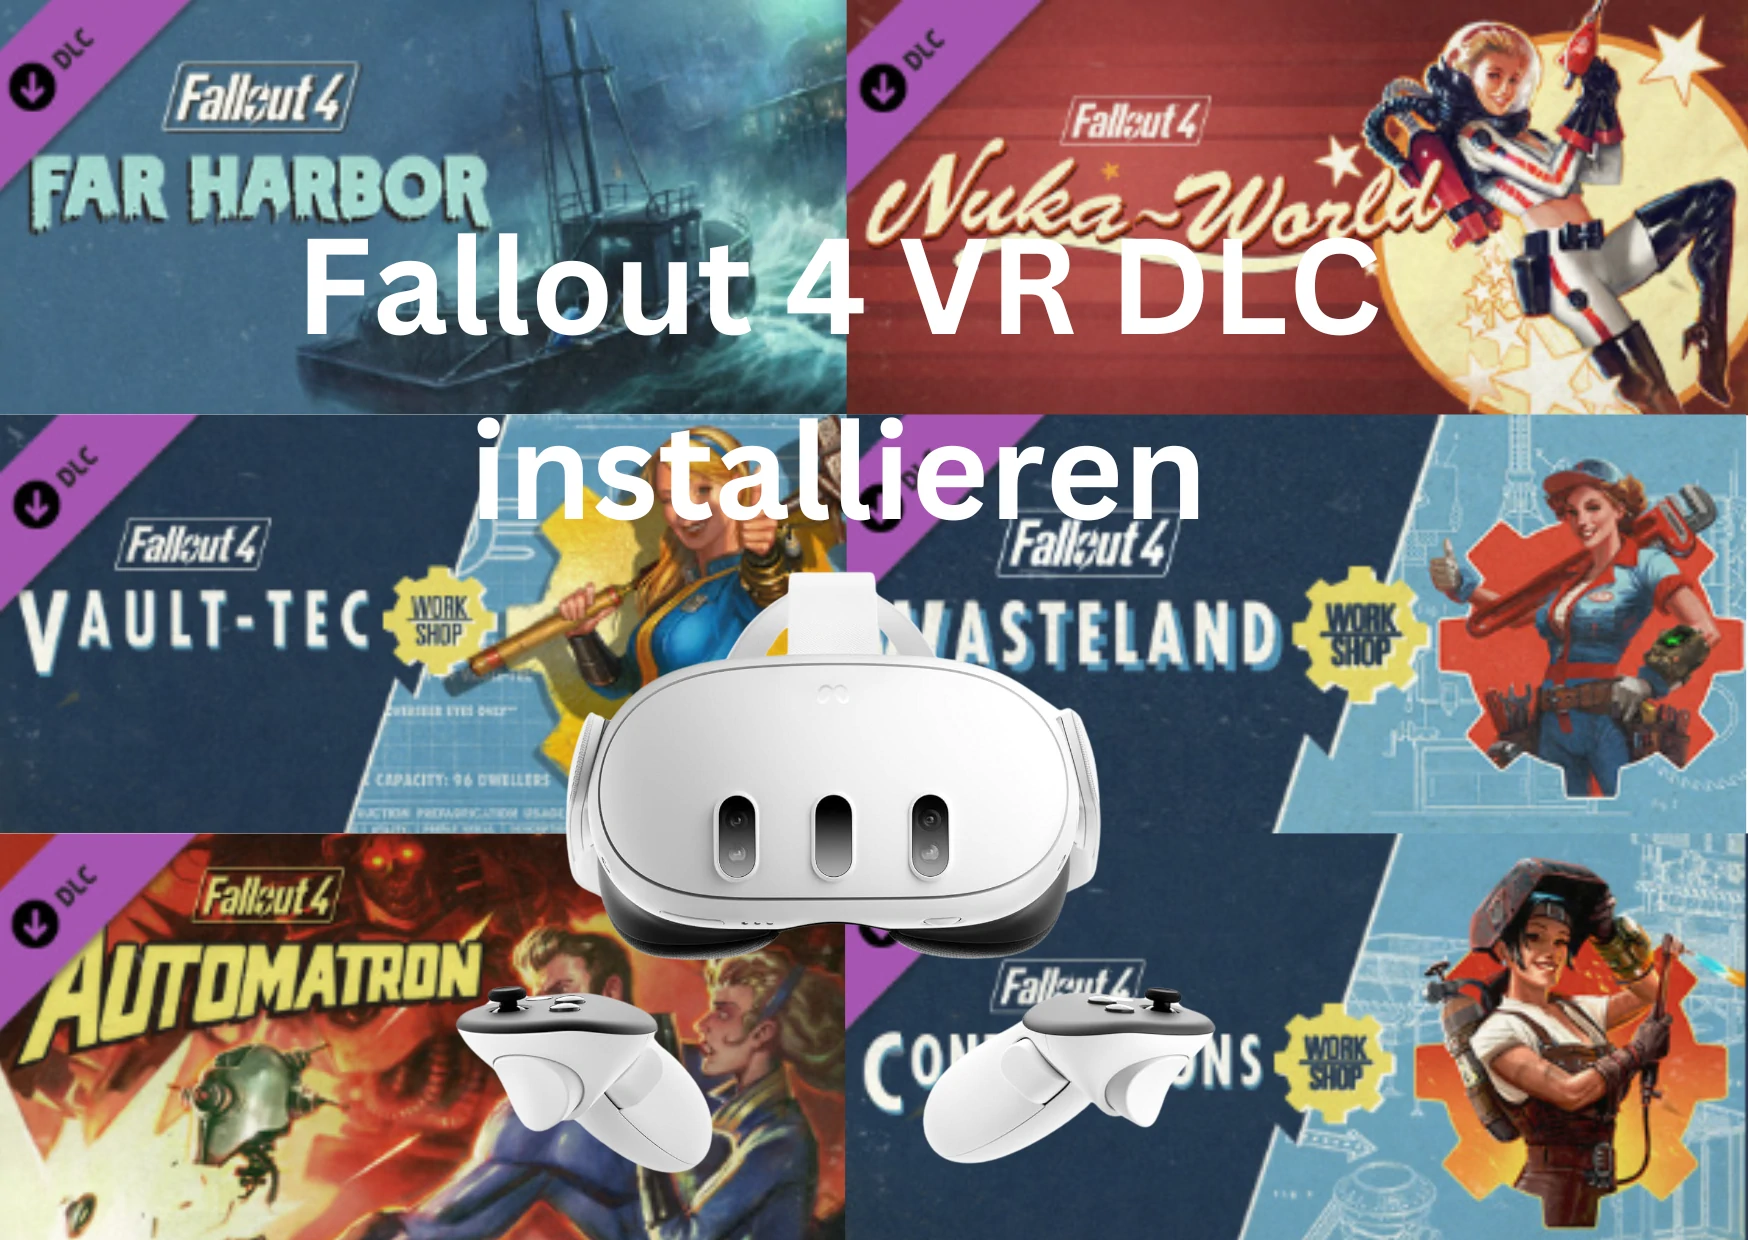 Fallout 4 VR DLC installieren: Dein ultimativer Leitfaden